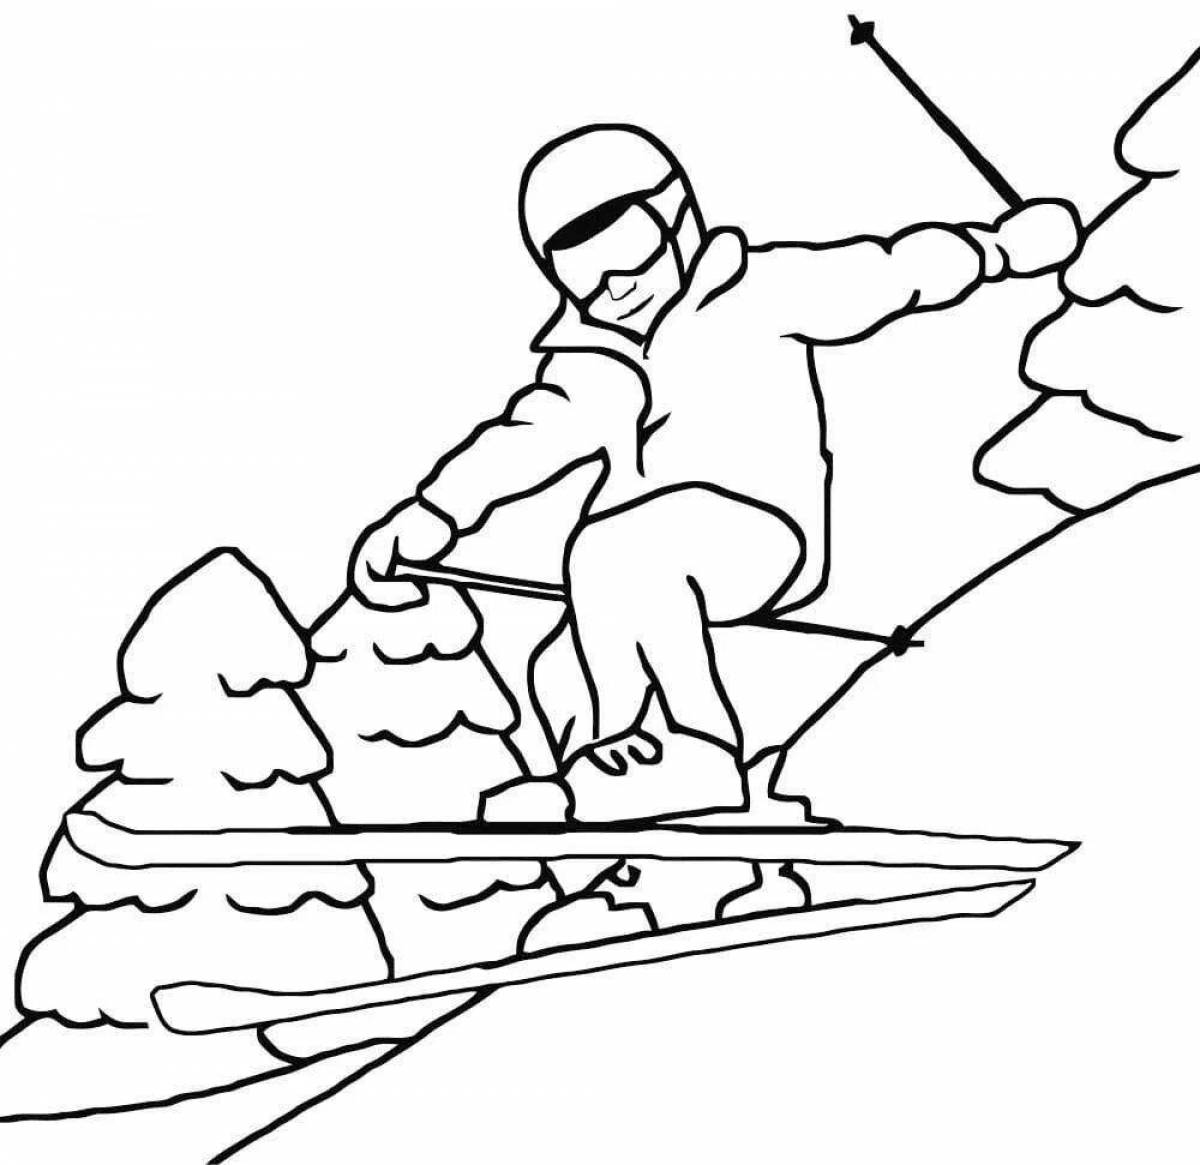 Coloring page joyful ski jumping